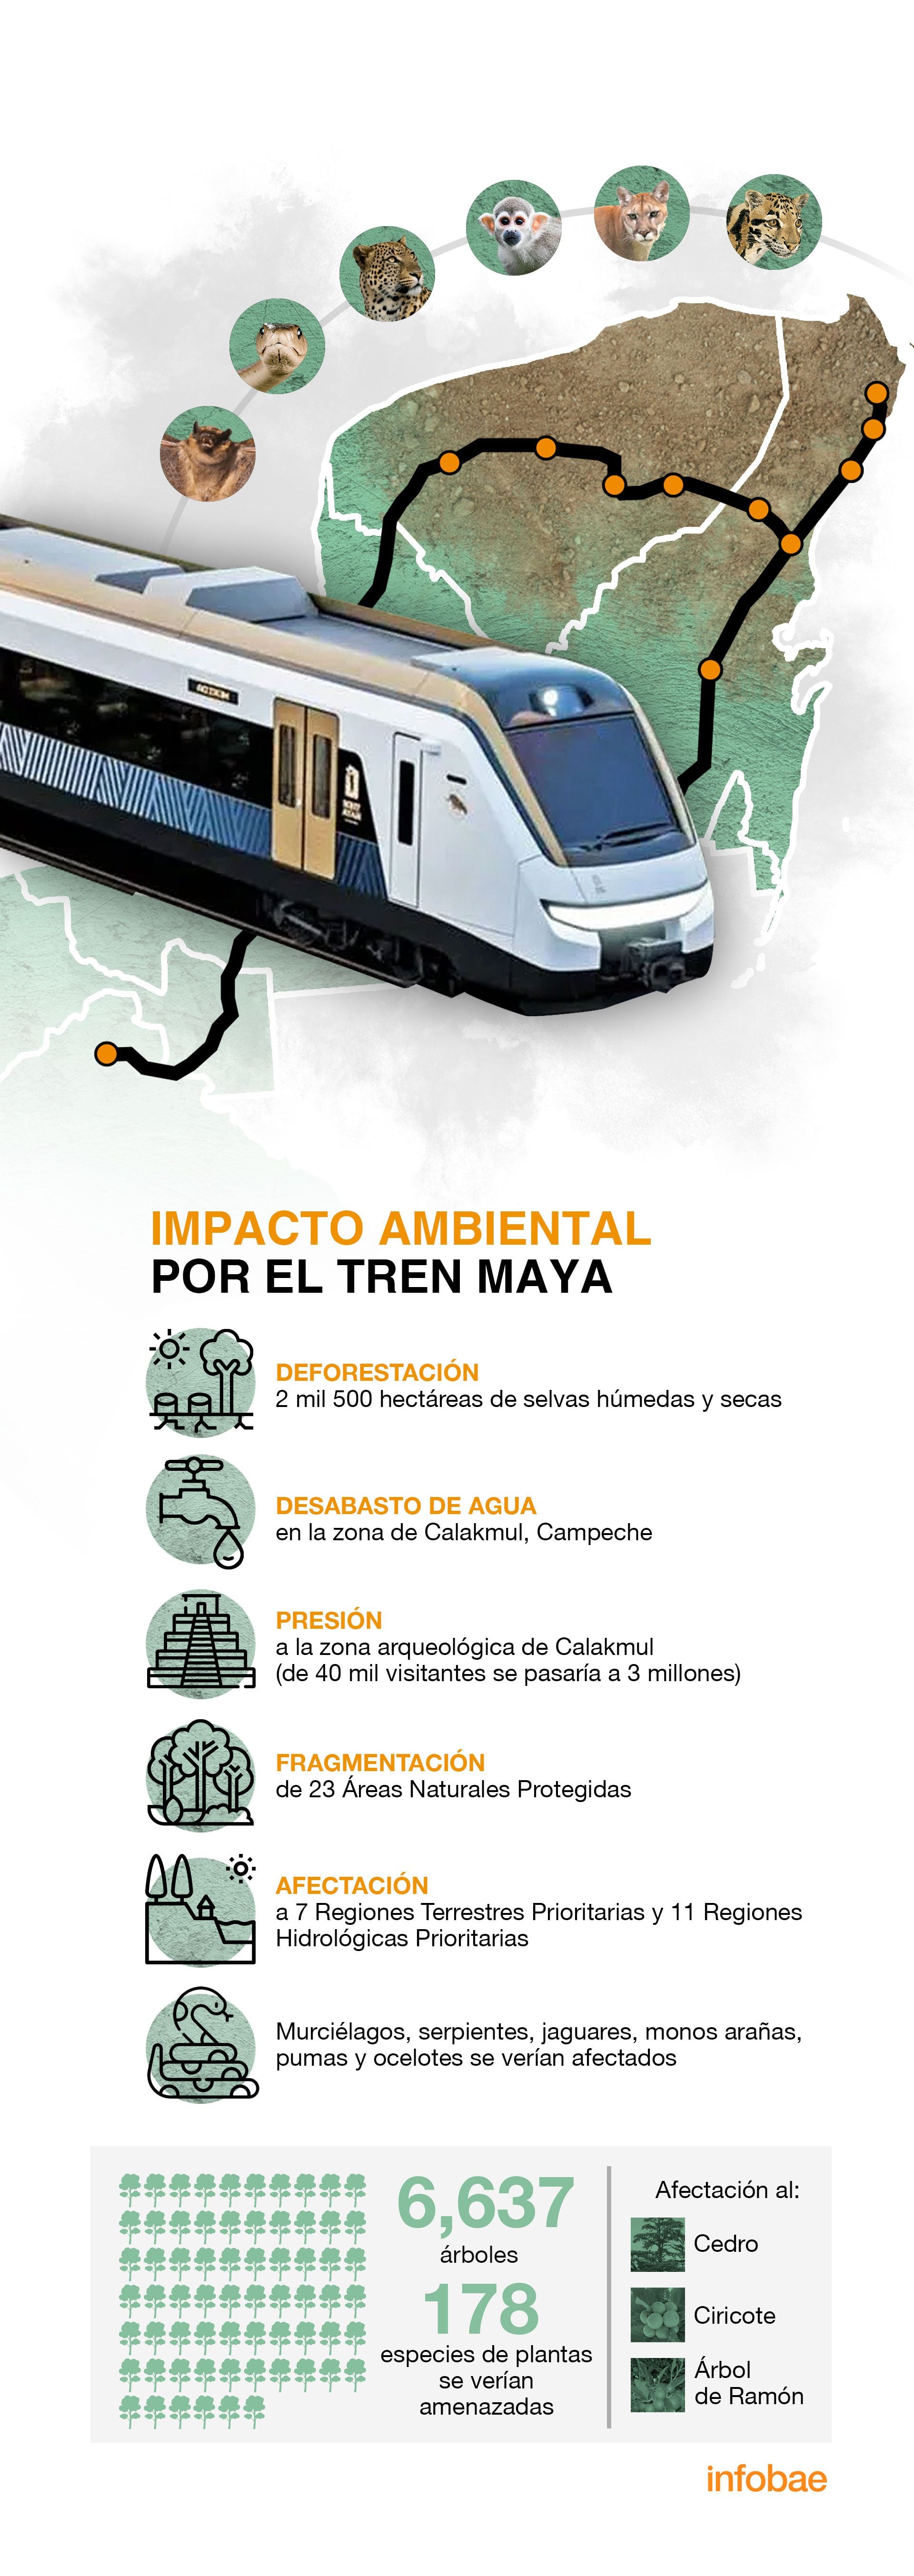 Tren Maya environmental impact infographic